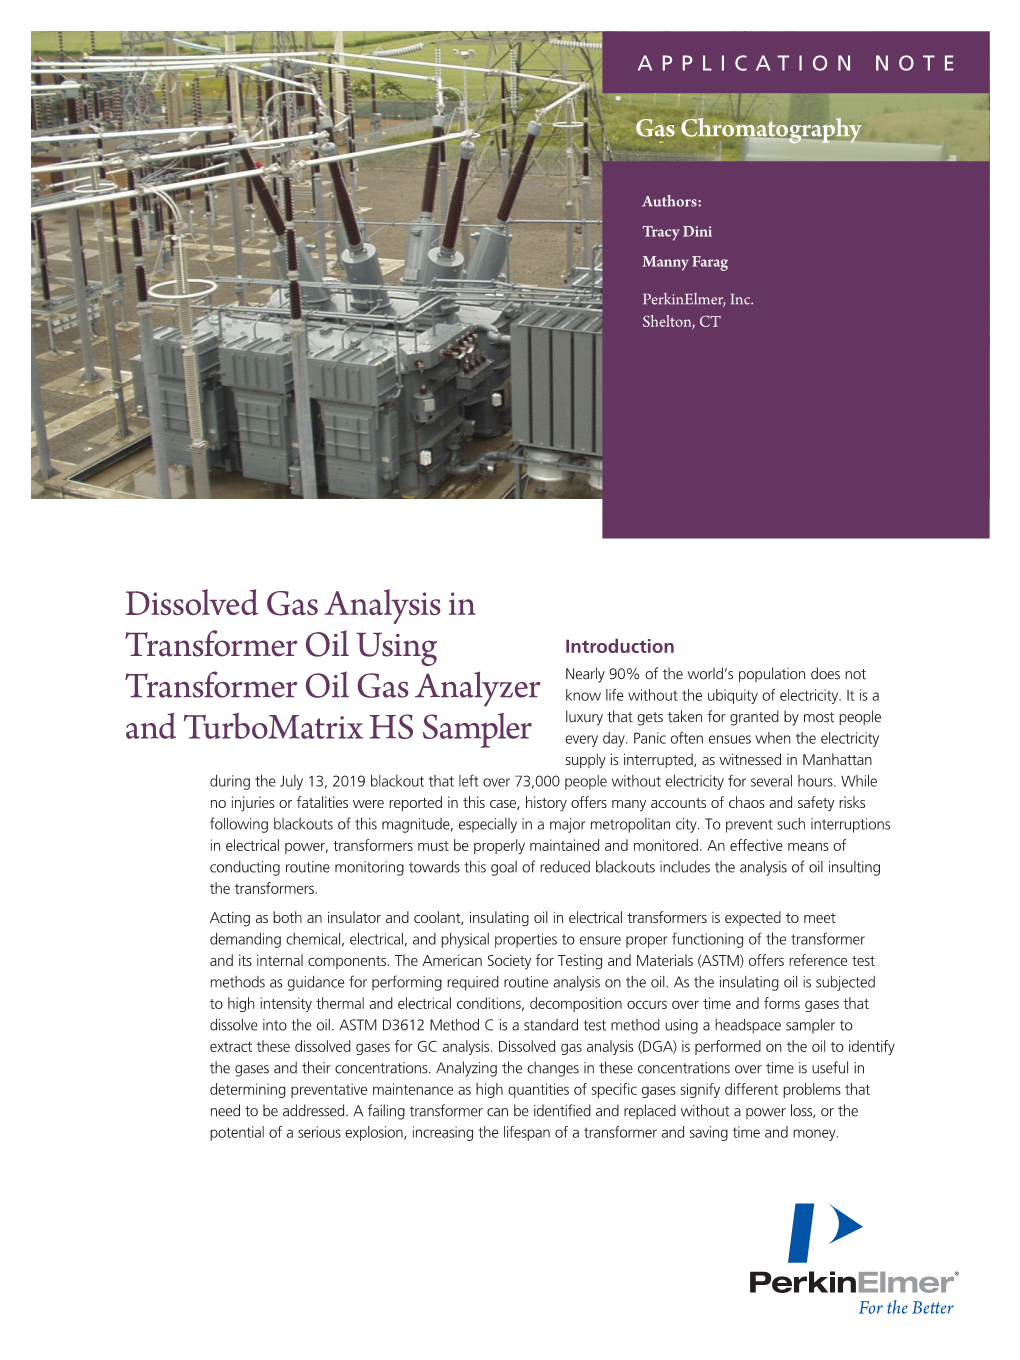 Dissolved Gas Analysis in Transformer Oil Using Transformer Oil Gas Analyzer